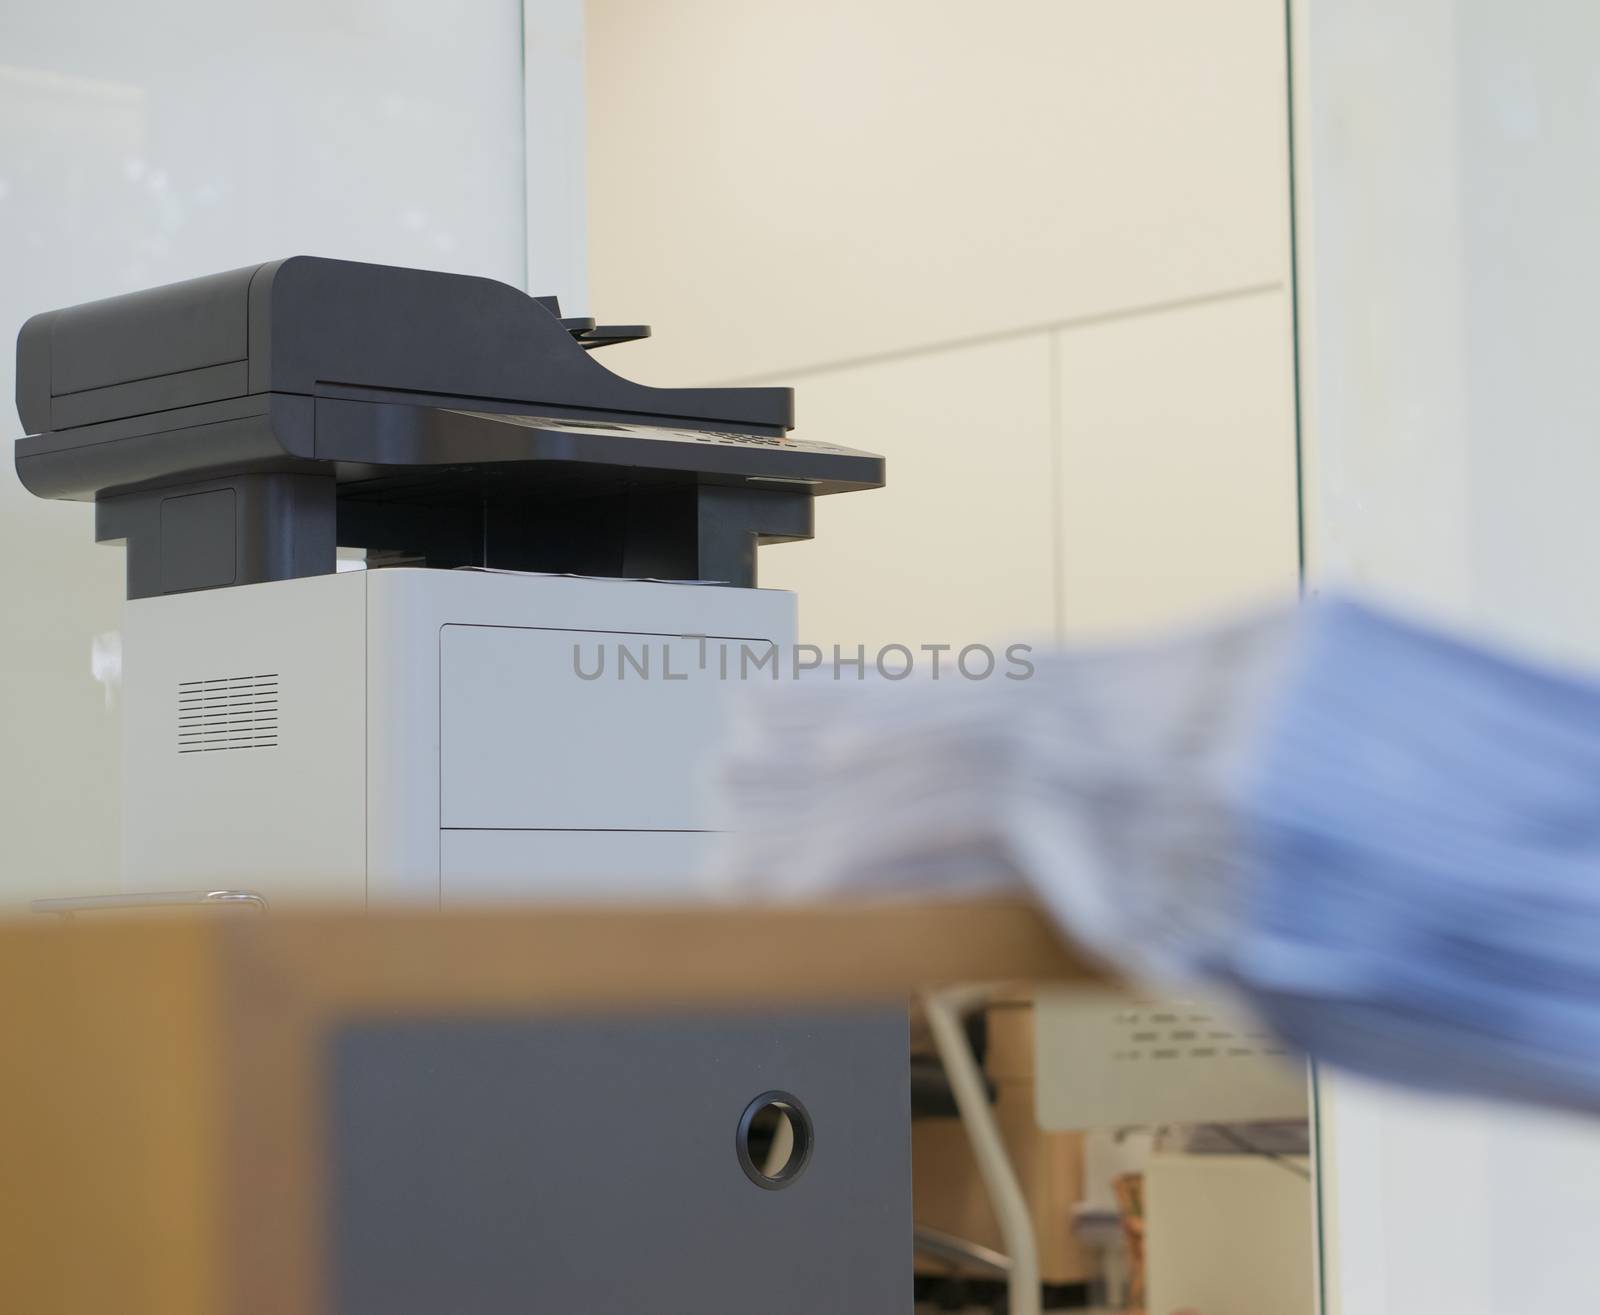 Printer in office by ninun